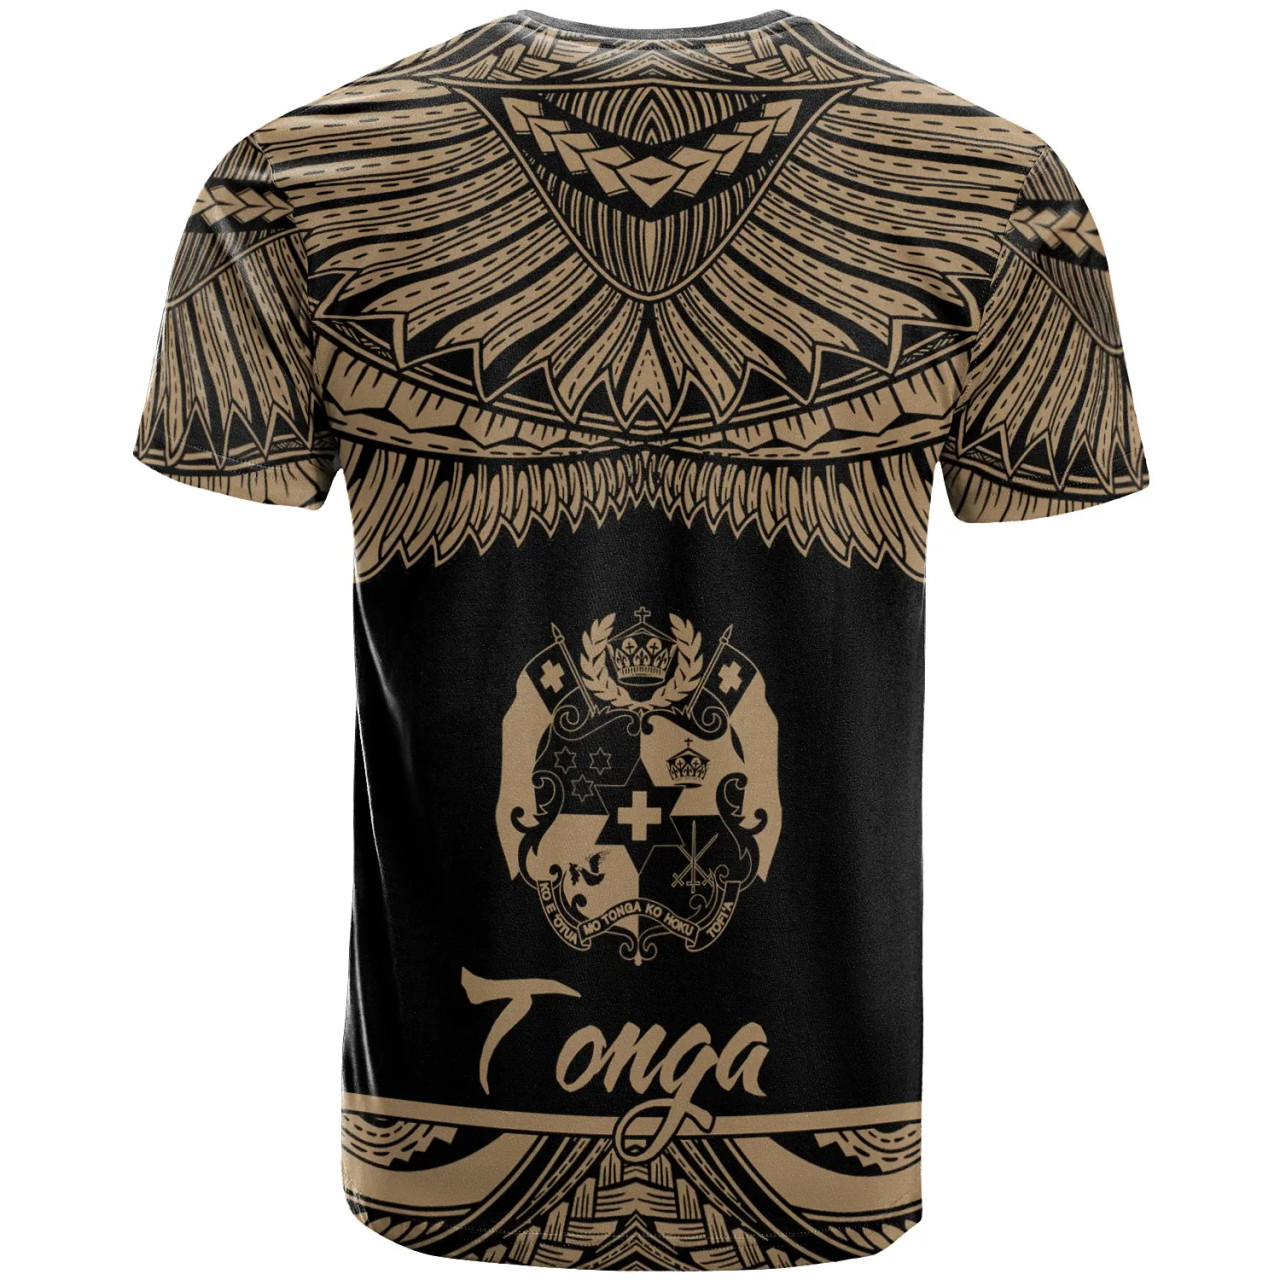 Tonga Polynesian T-Shirt - Tonga Pride Gold Version 2